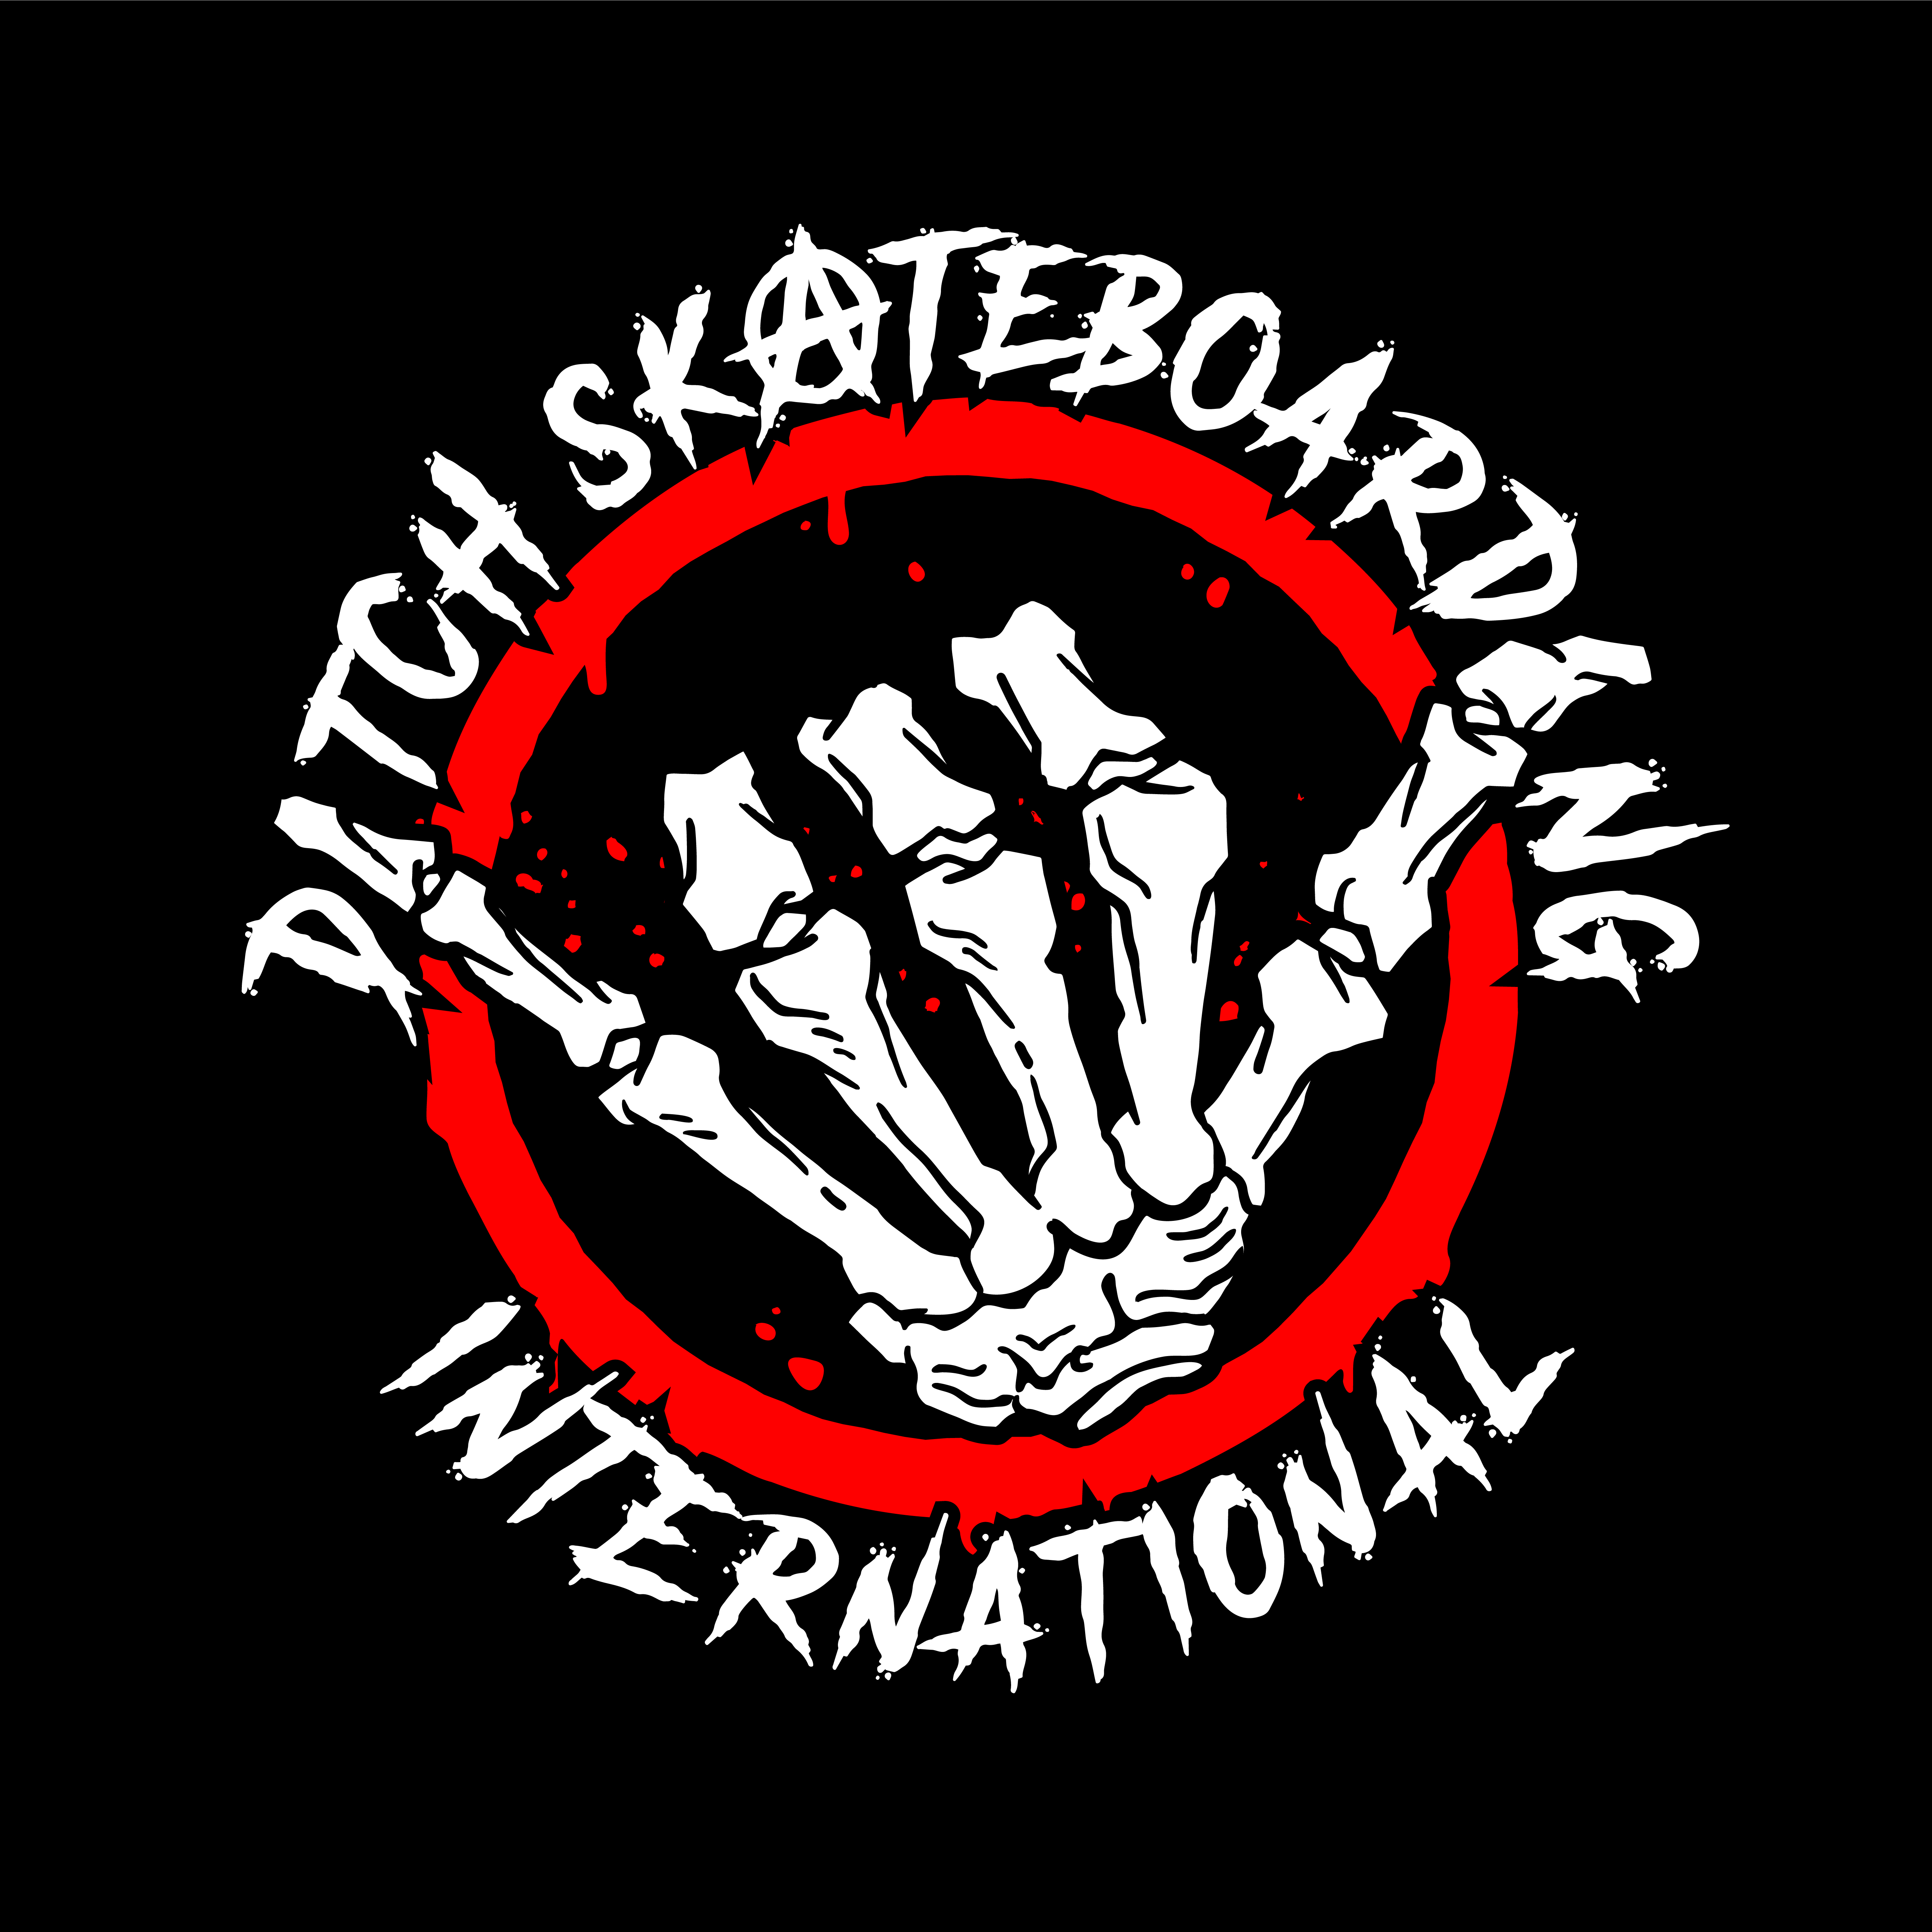 Ditch Skateboarding International